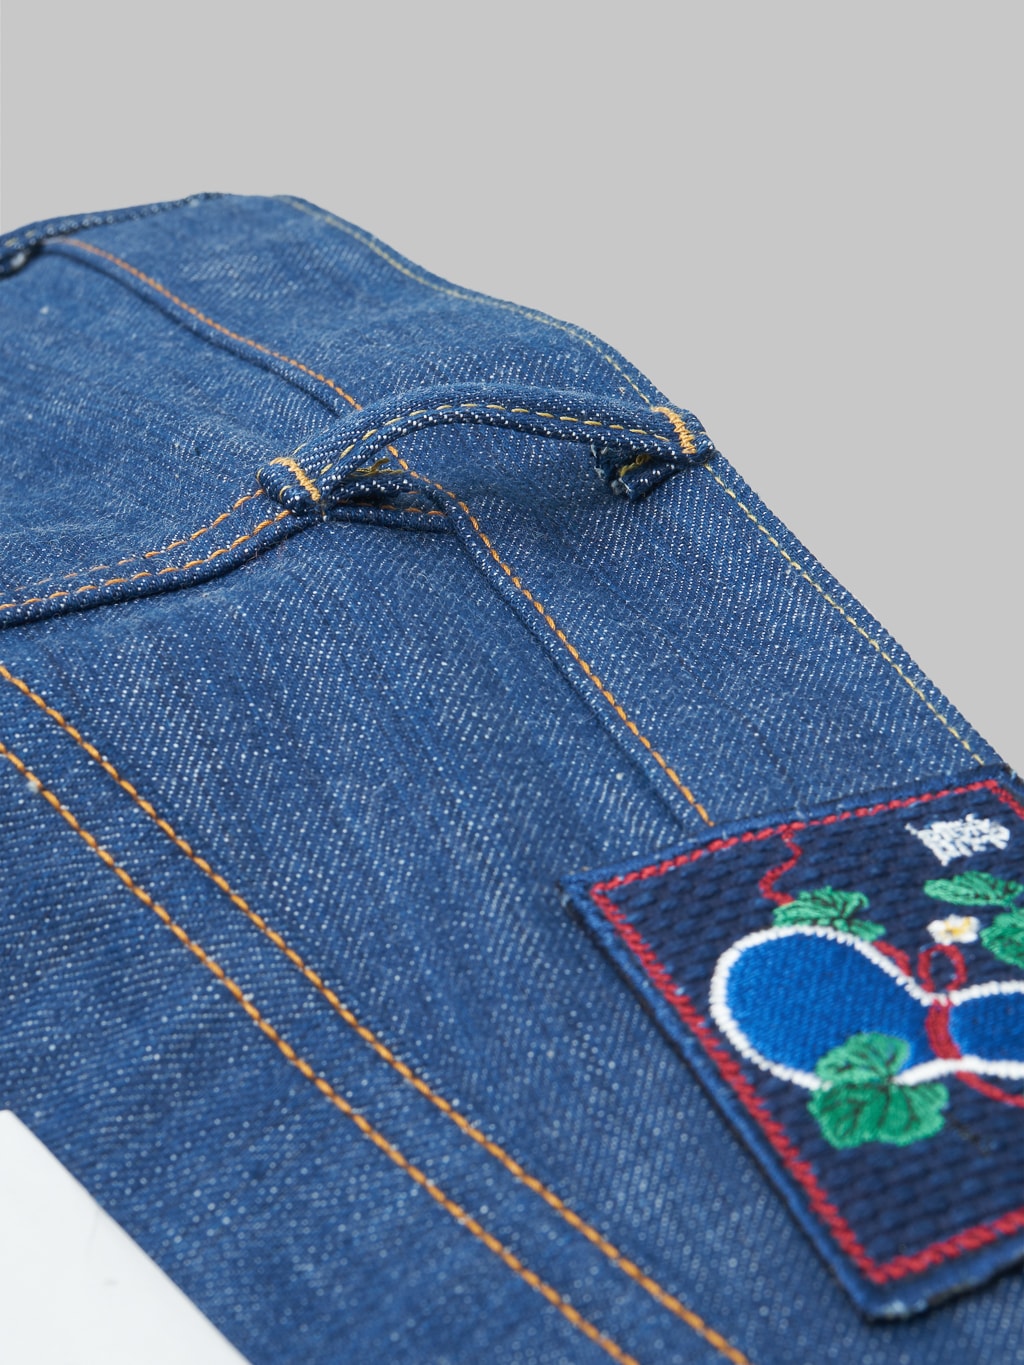 momotaro 0605 ai natural indigo dyed natural tapered denim jeans belt loop